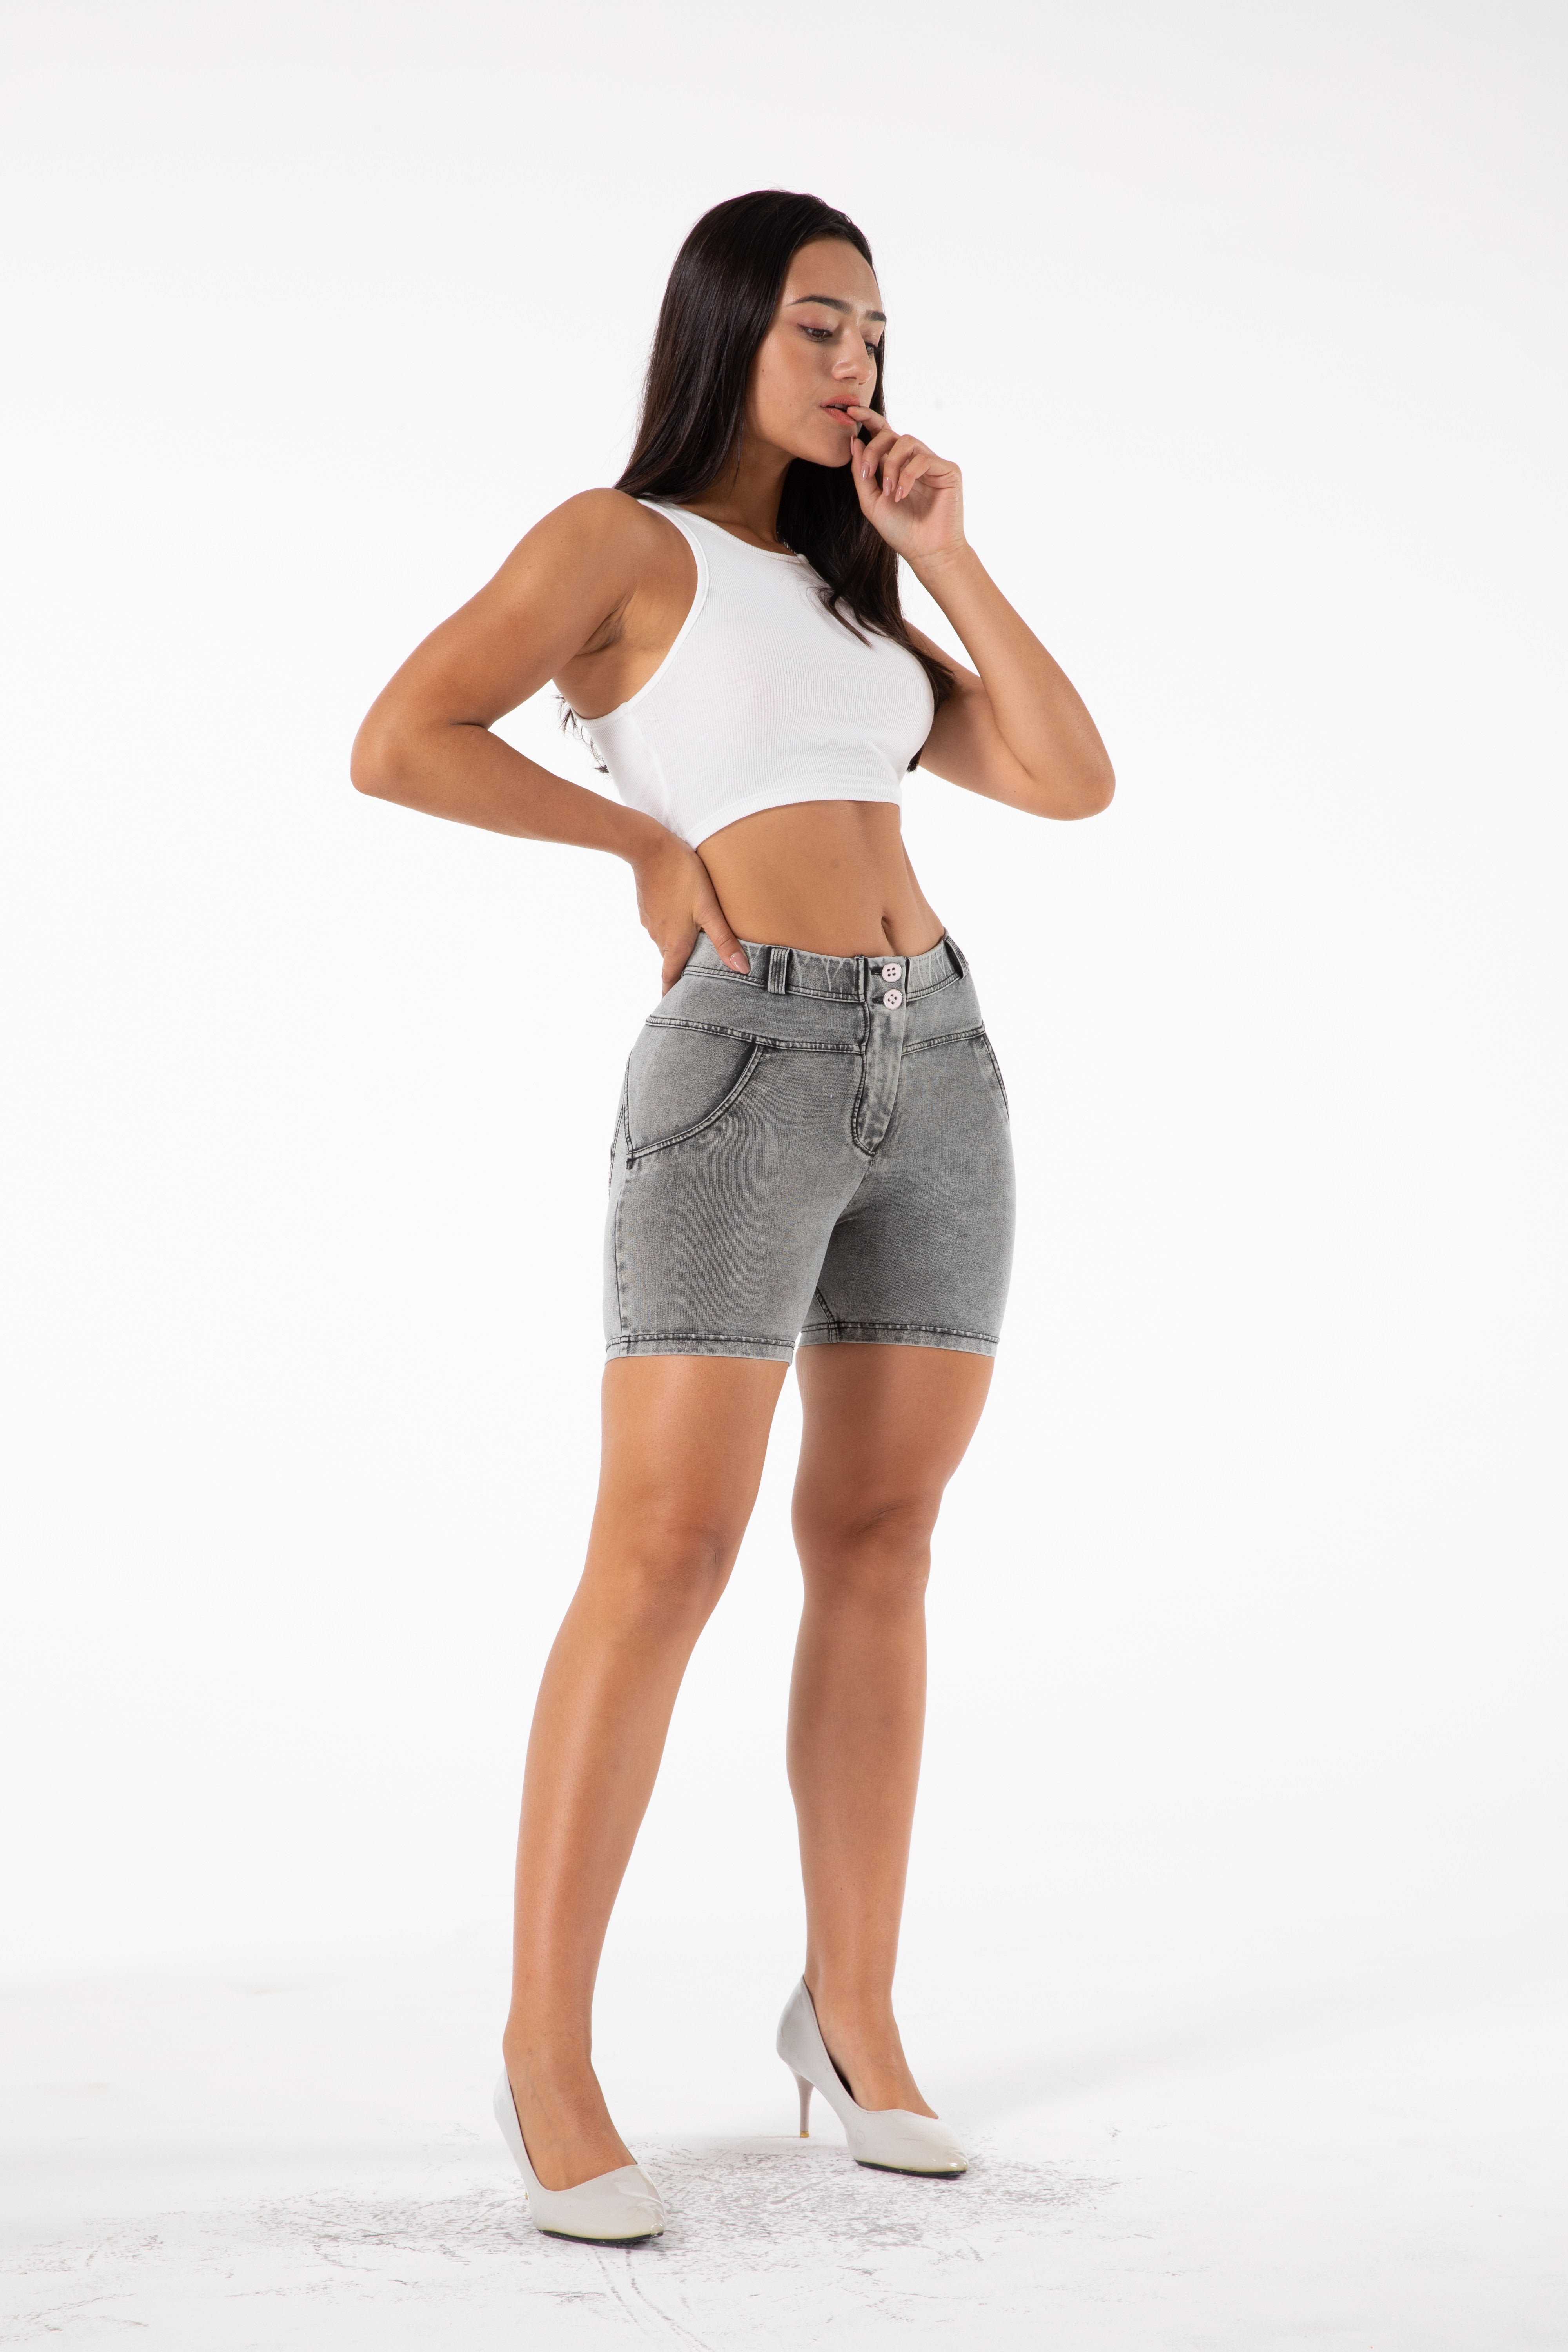 Shascullfites Melody bum lift shapewear for women ultra lift body slimming shaper cotton hip shapewear